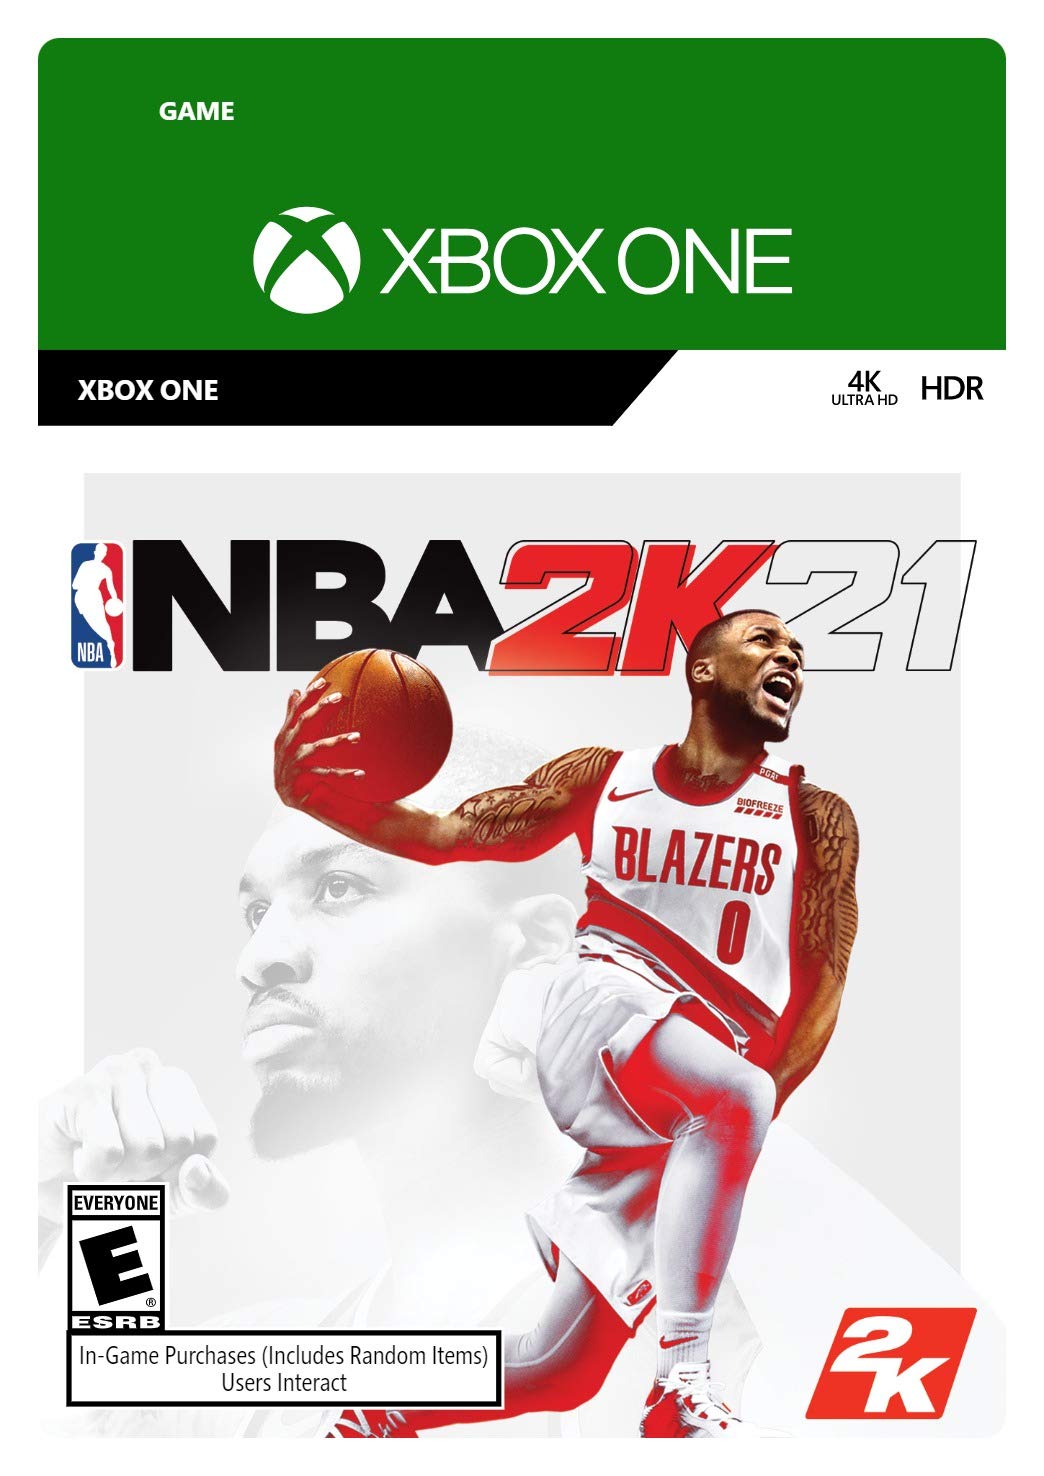 Xbox One Digital Games: NBA 2K21: Mamba Forever Edition $76.50, NBA 2K21